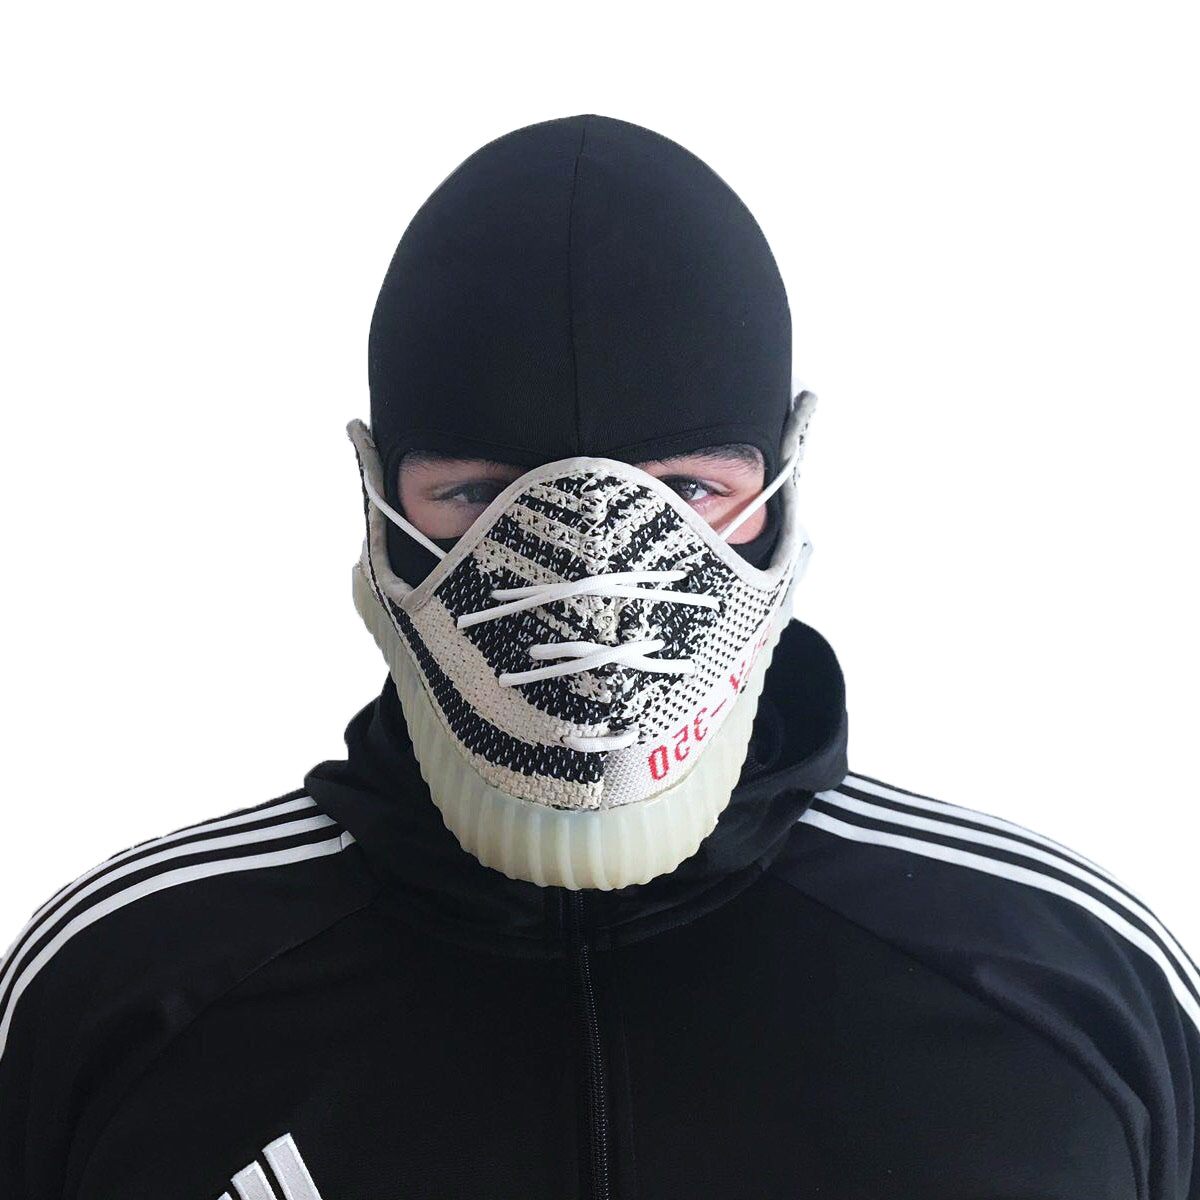 Yeezy Zebra Mask 1.0